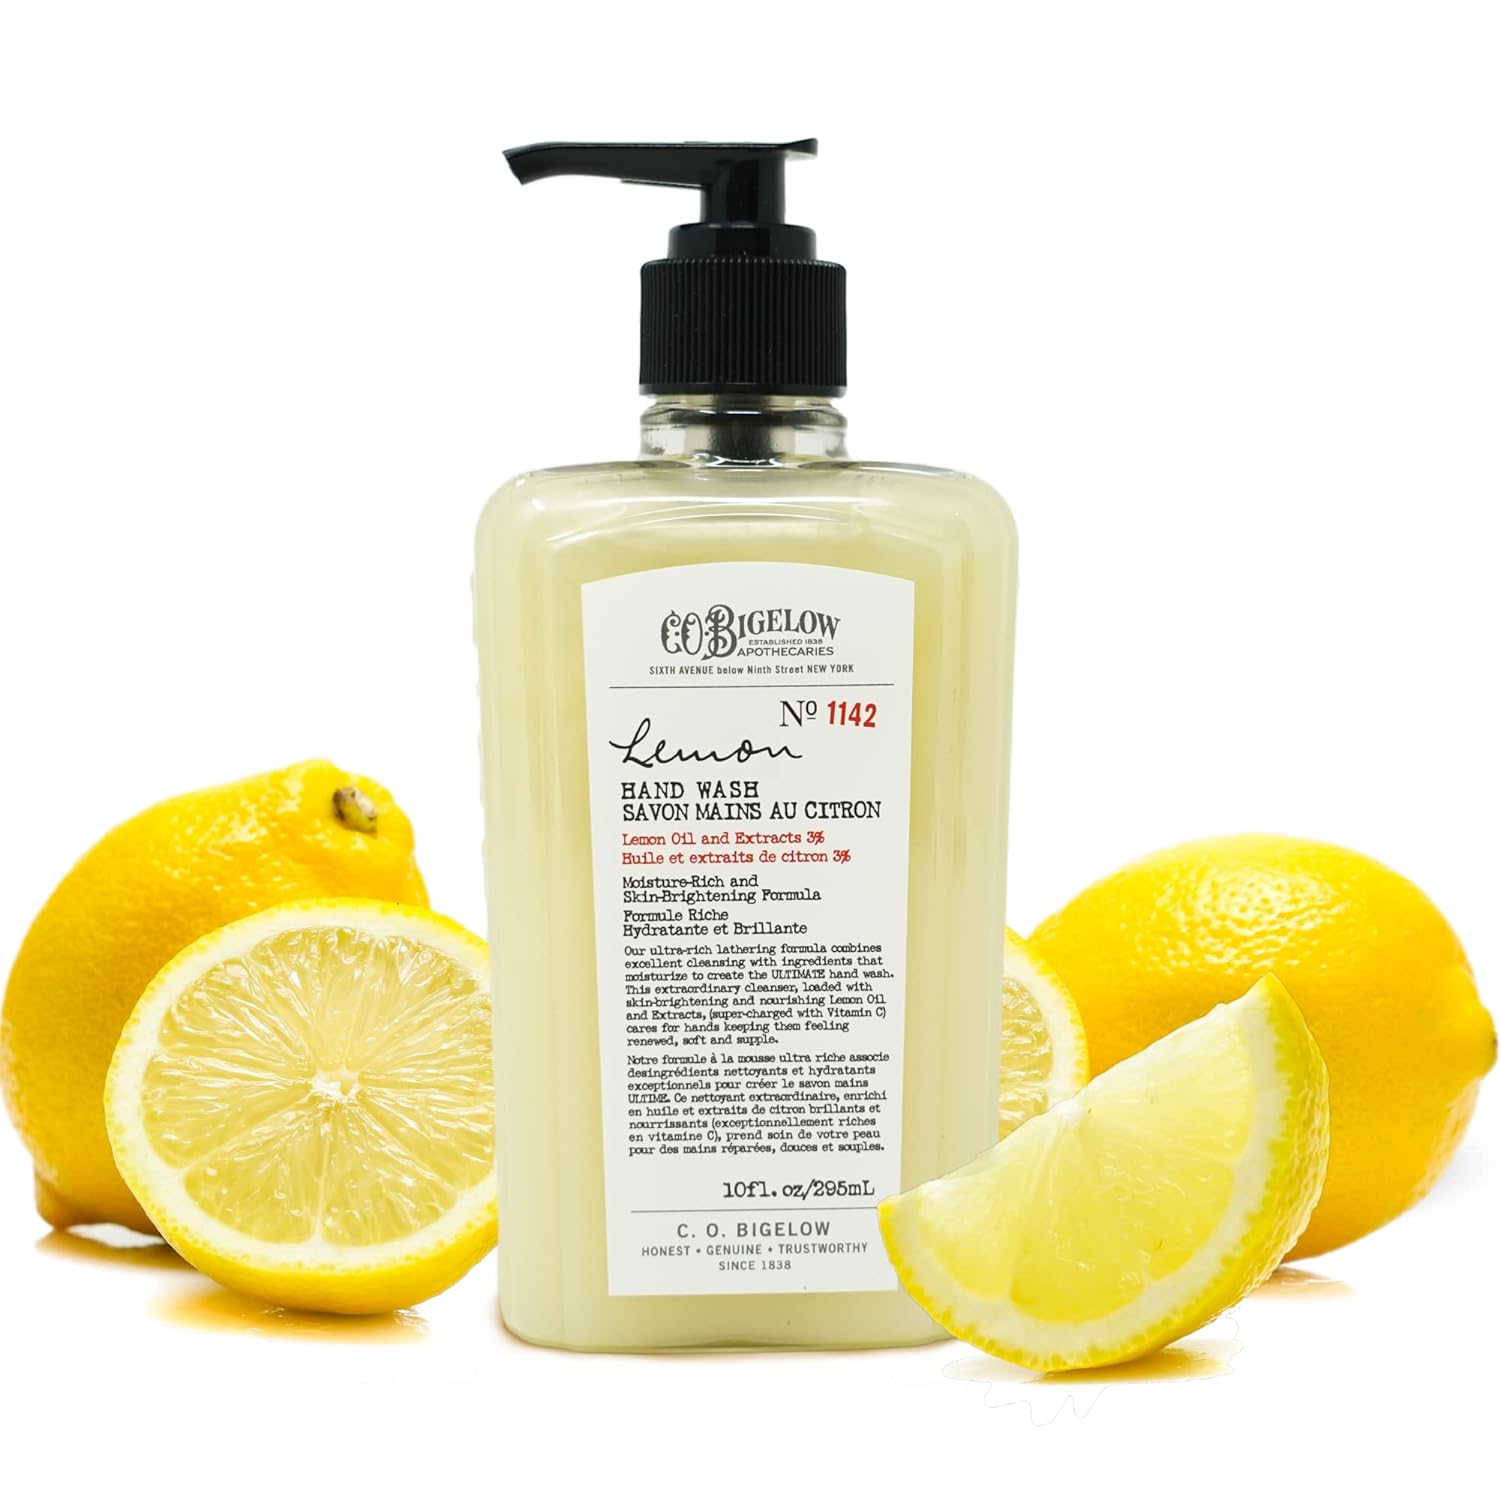 C.O. Bigelow Lemon Hand Wash - No. 1142, Moisturizing Liquid Hand Soap with Lemon Extract & Vitamin C, Cruelty Free & Gentle for All Skin Types, 10